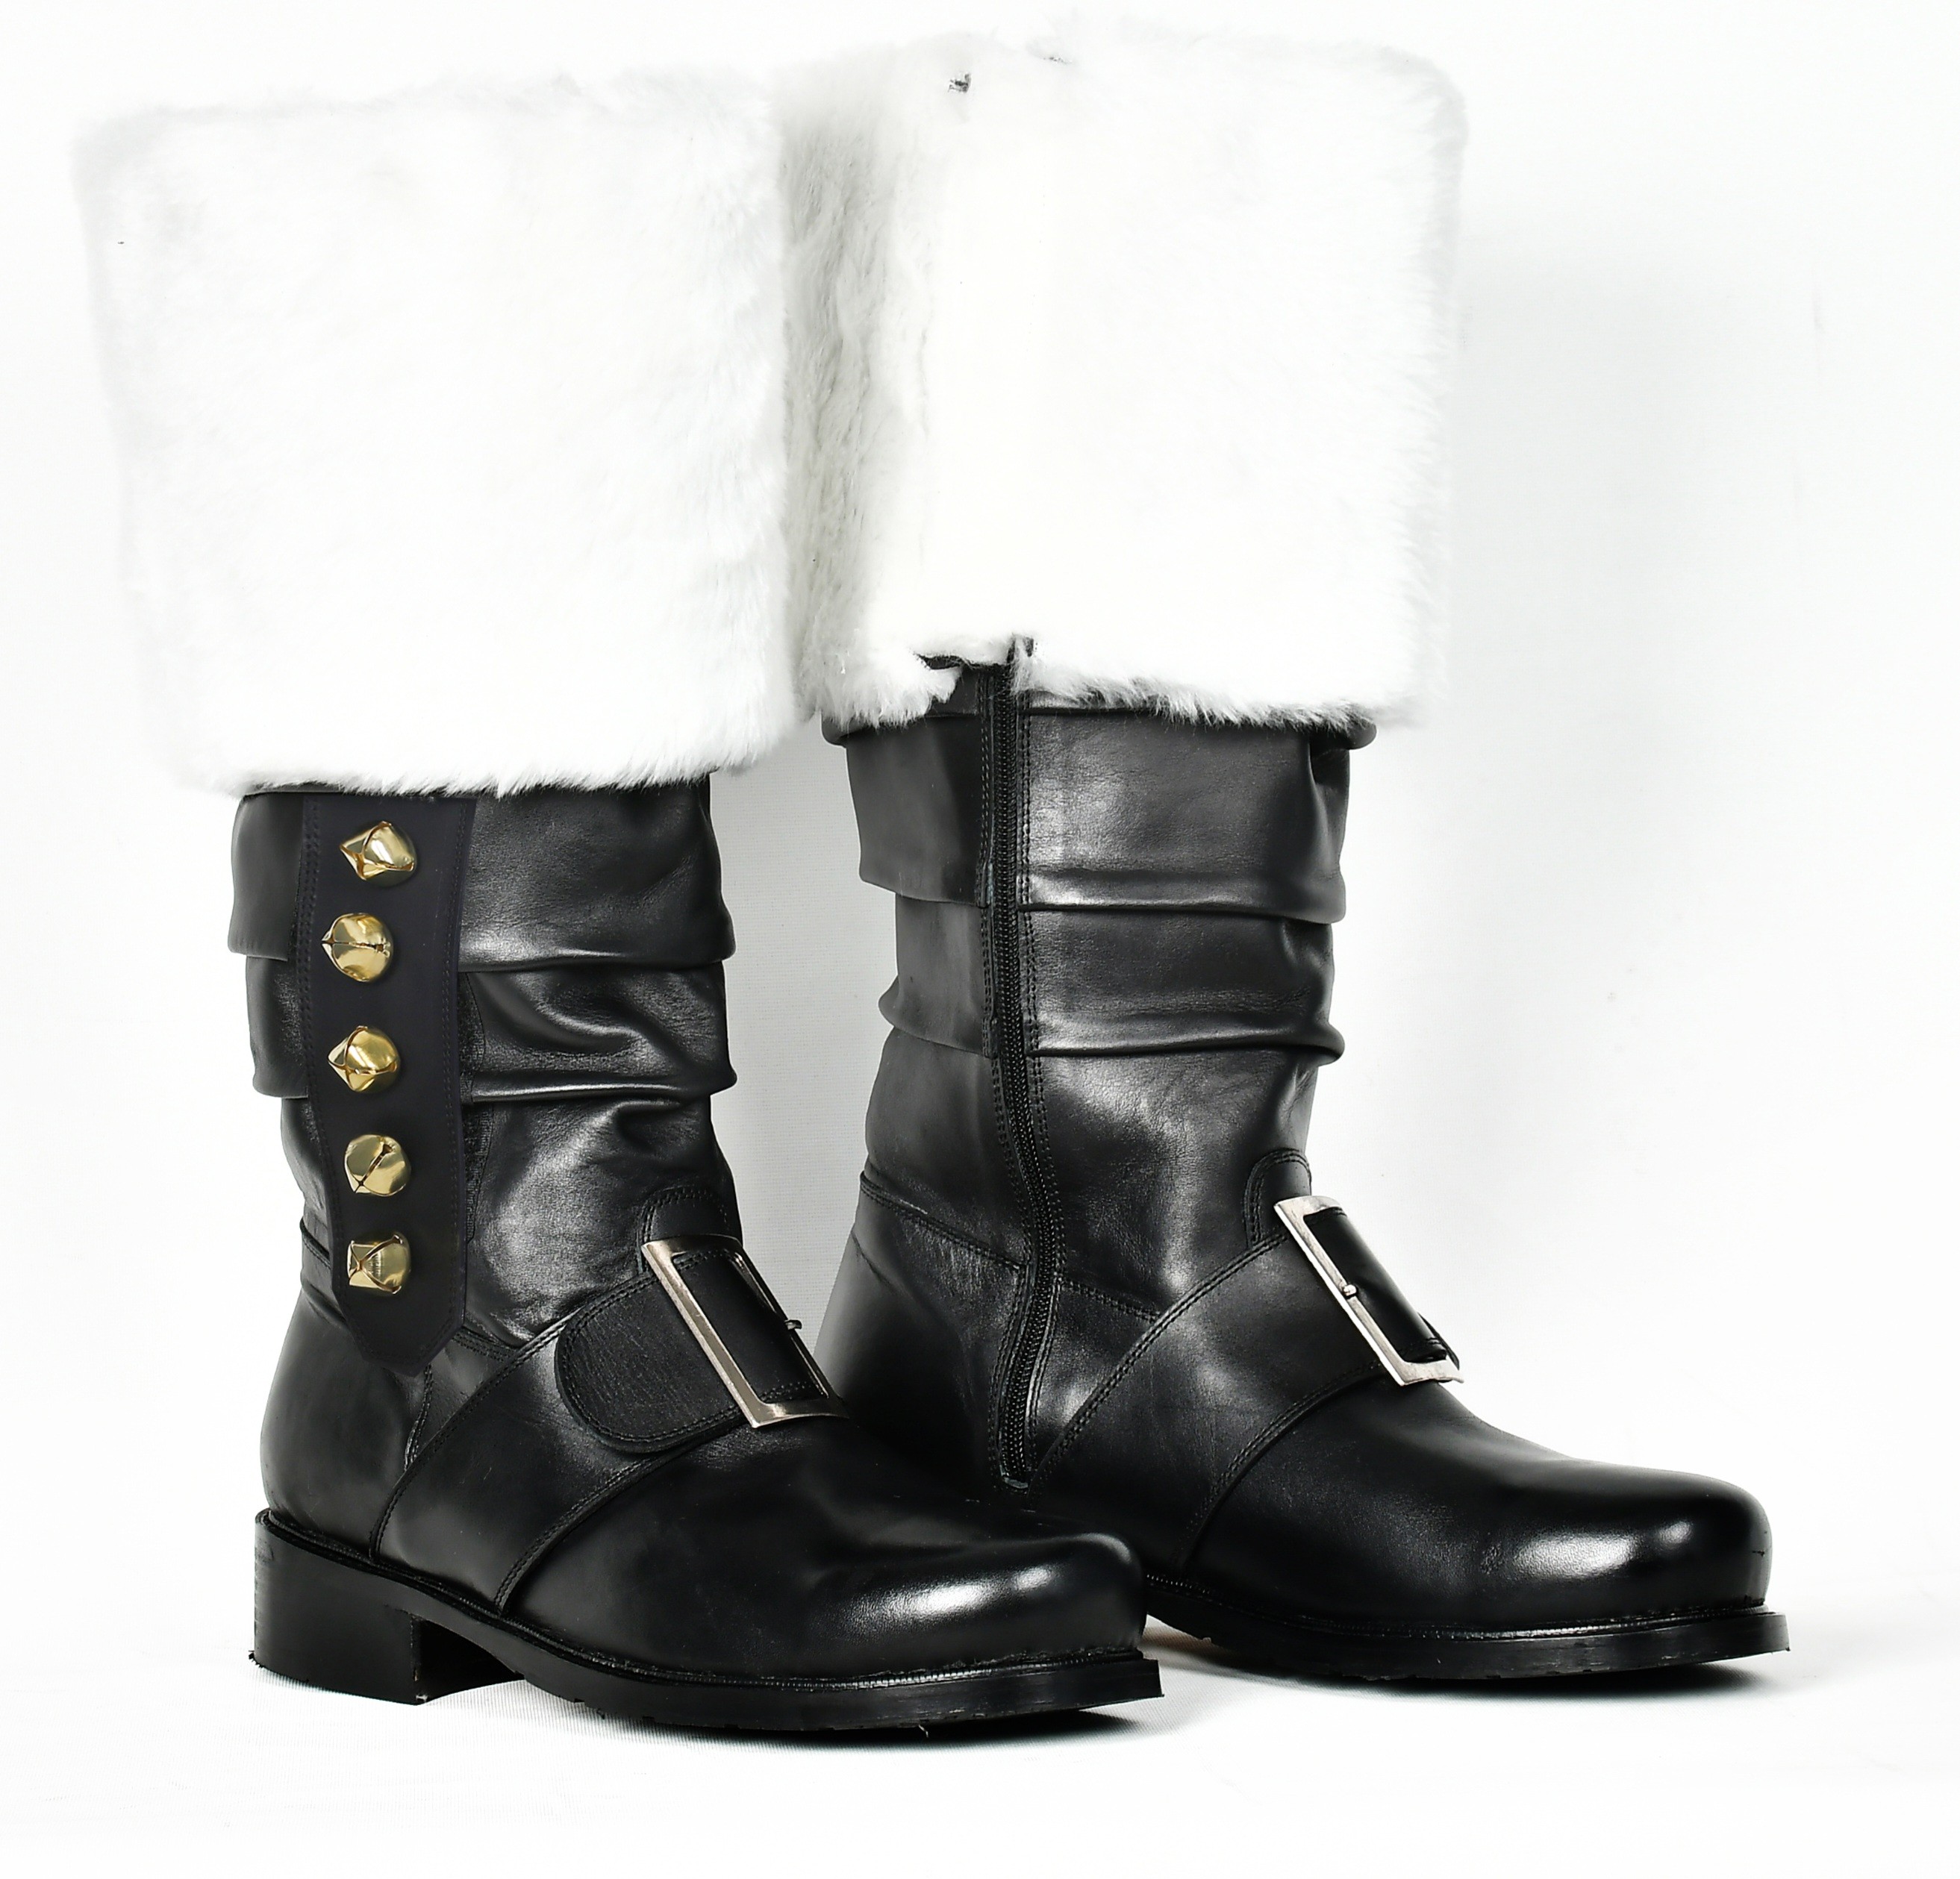 SPECIAL ORDER PROSANTA SHOP Exclusive Handmade SC Design Skinny Cuff Santa Boot 